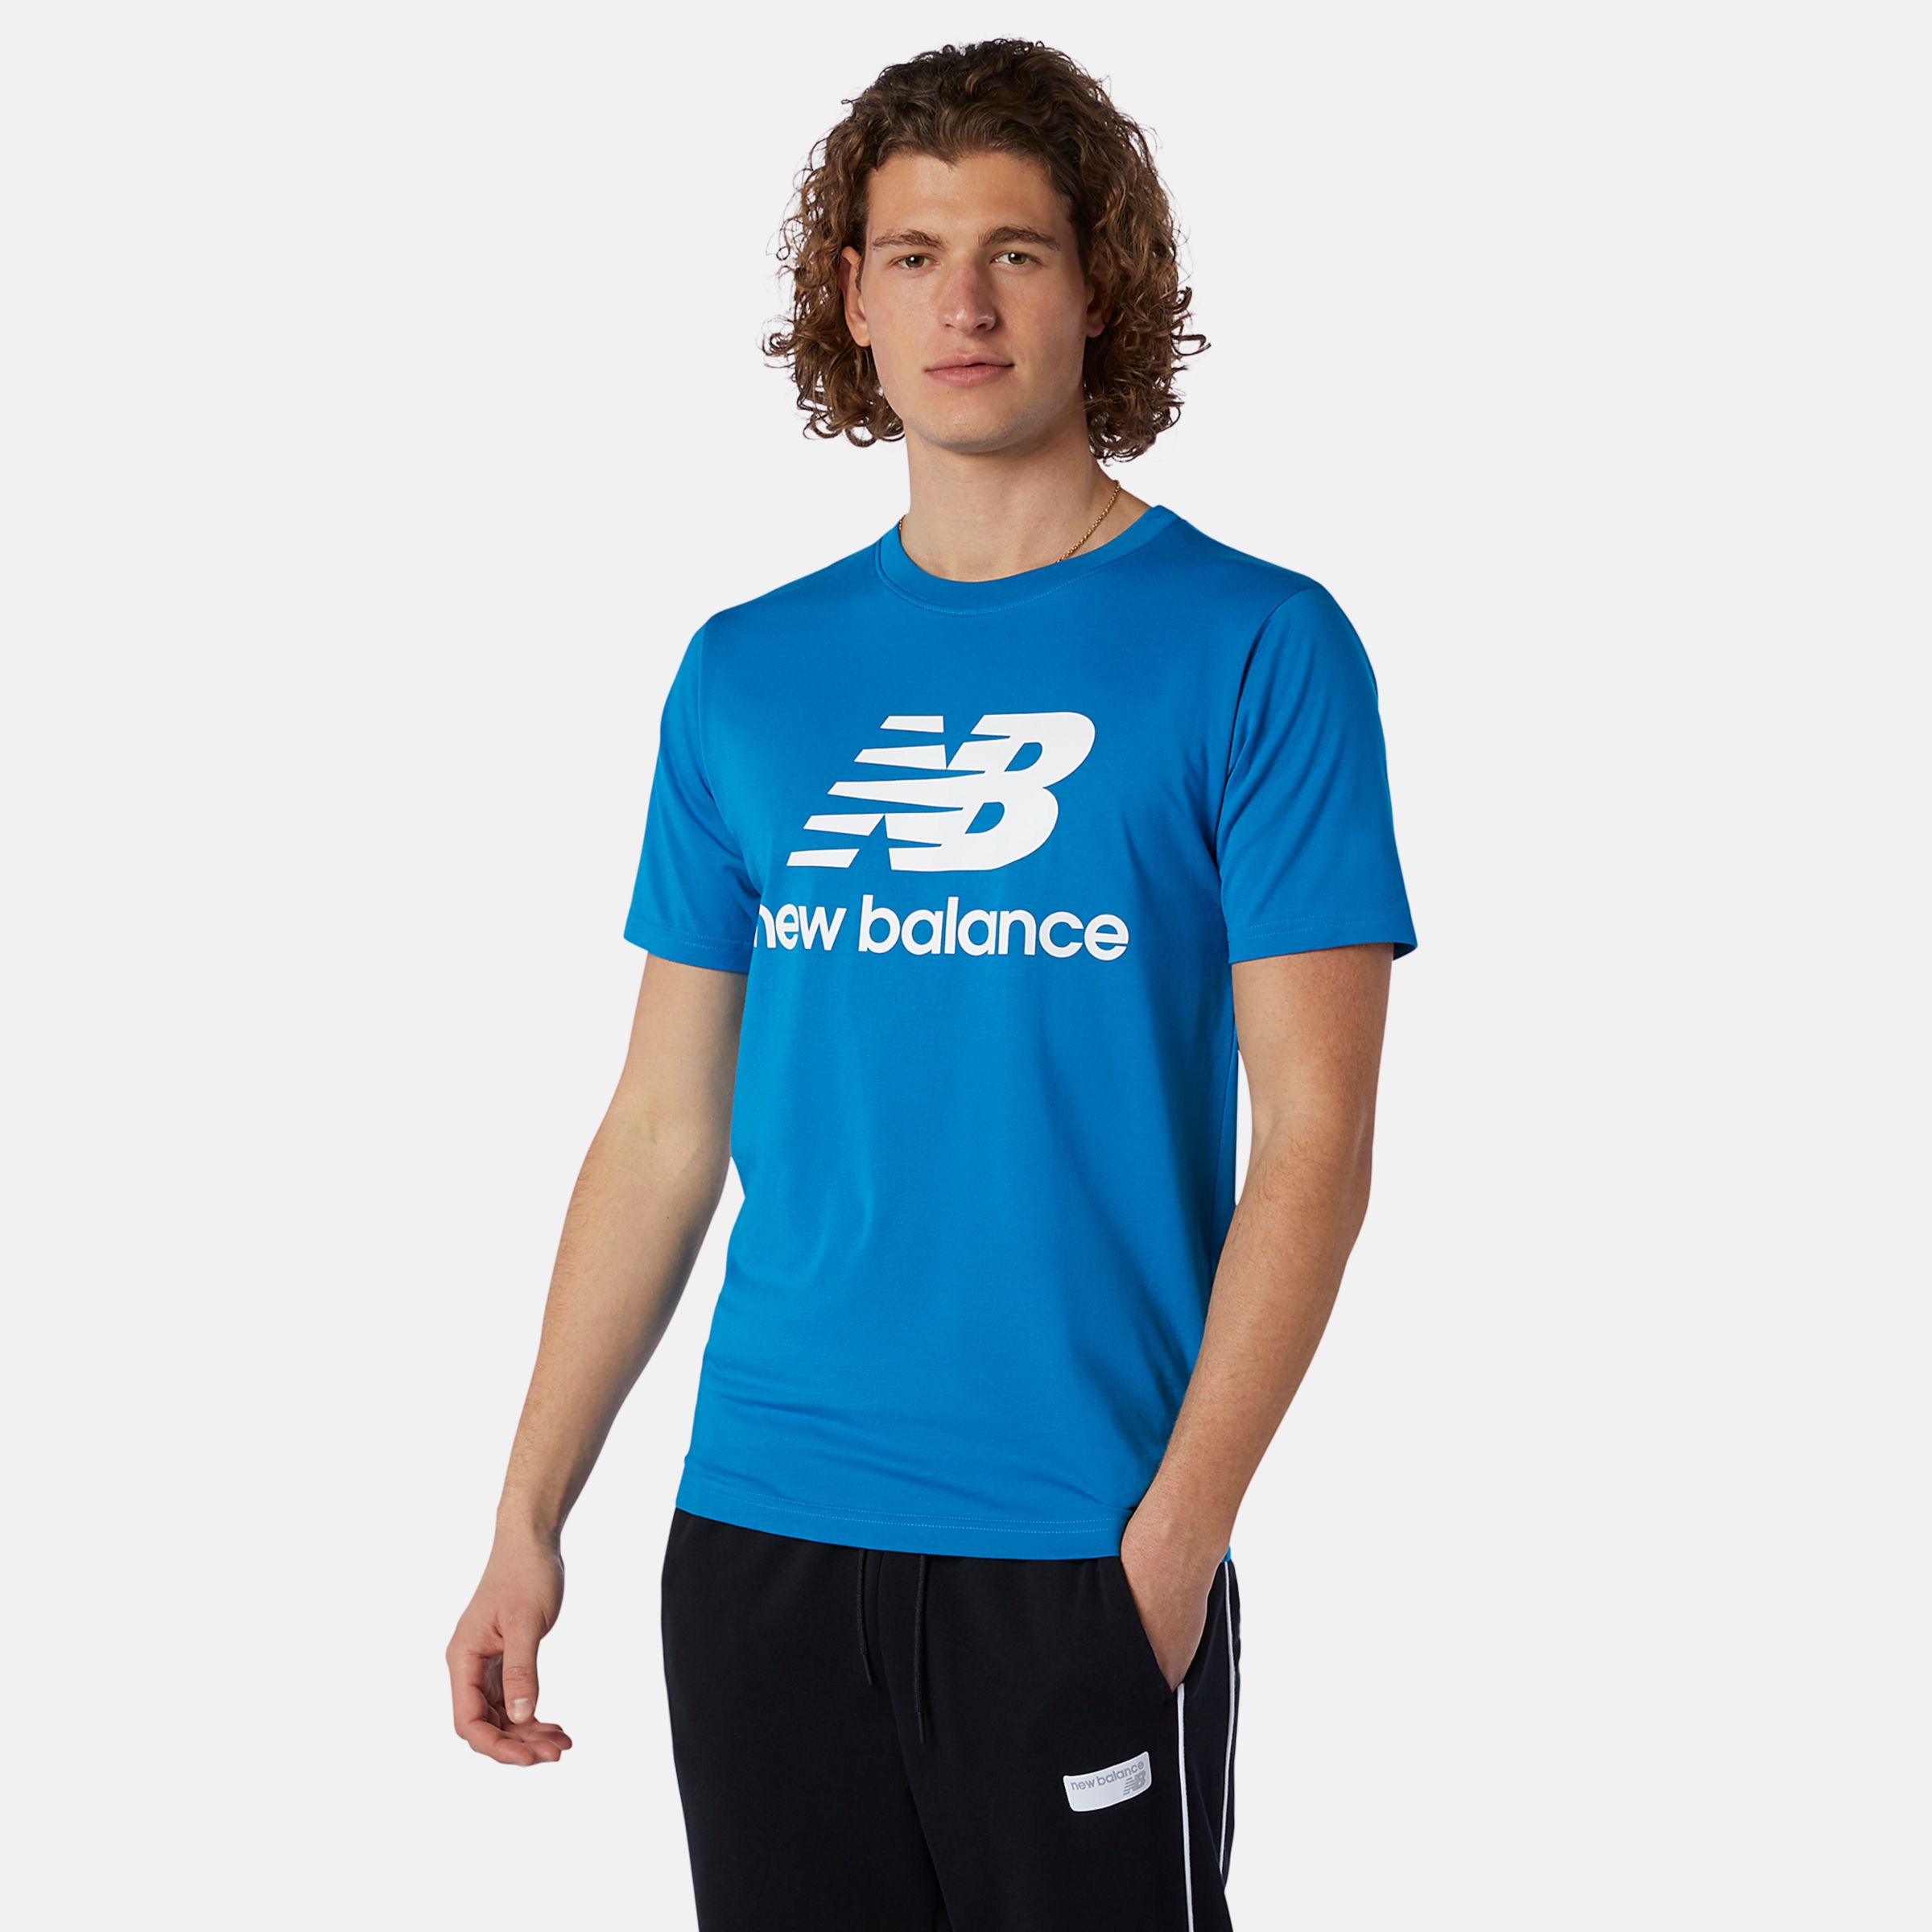 new balance men's apparel